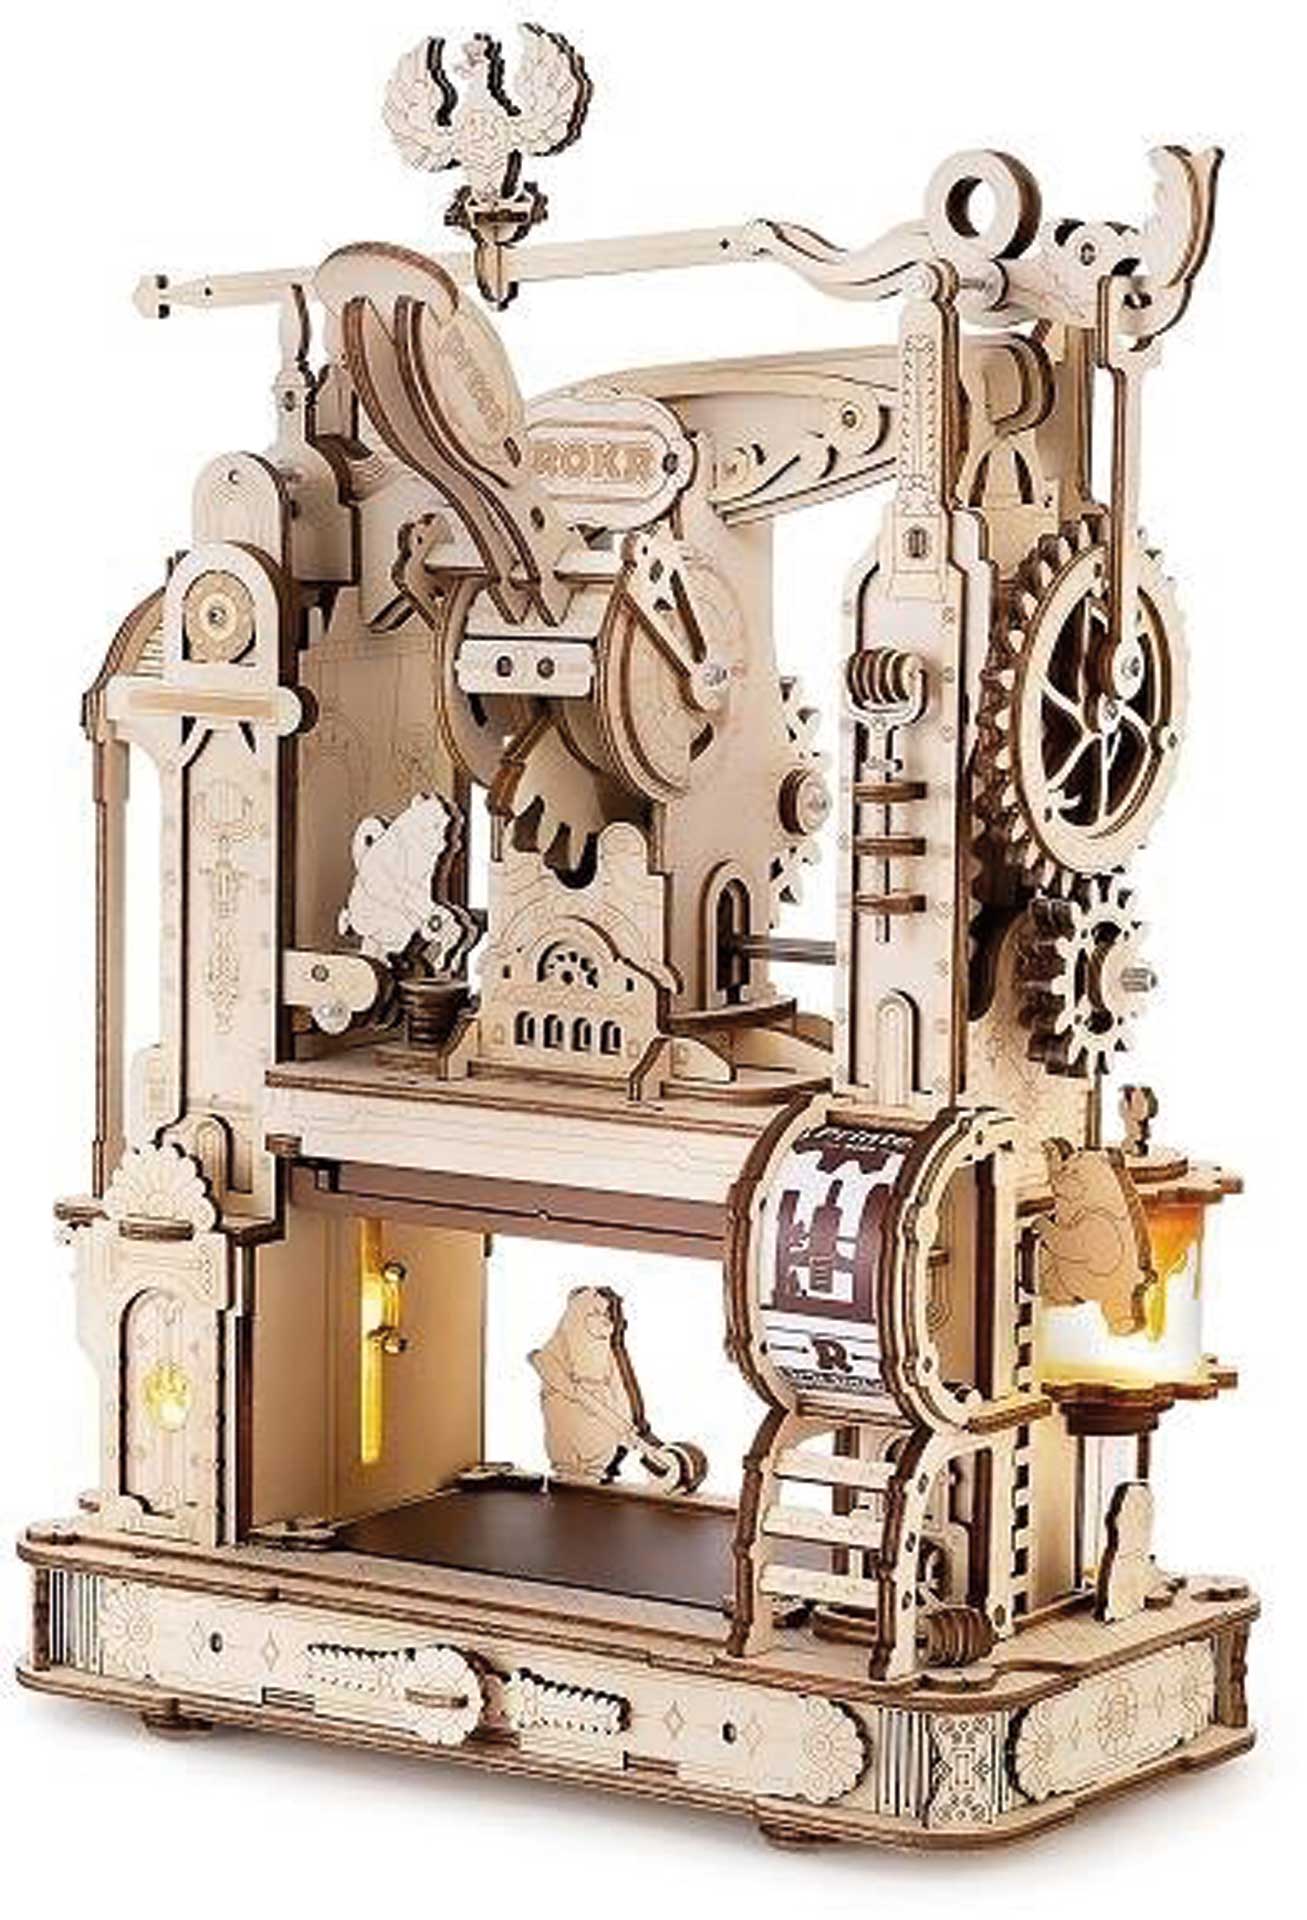 PICHLER Printing press (Lasercut wooden kit)